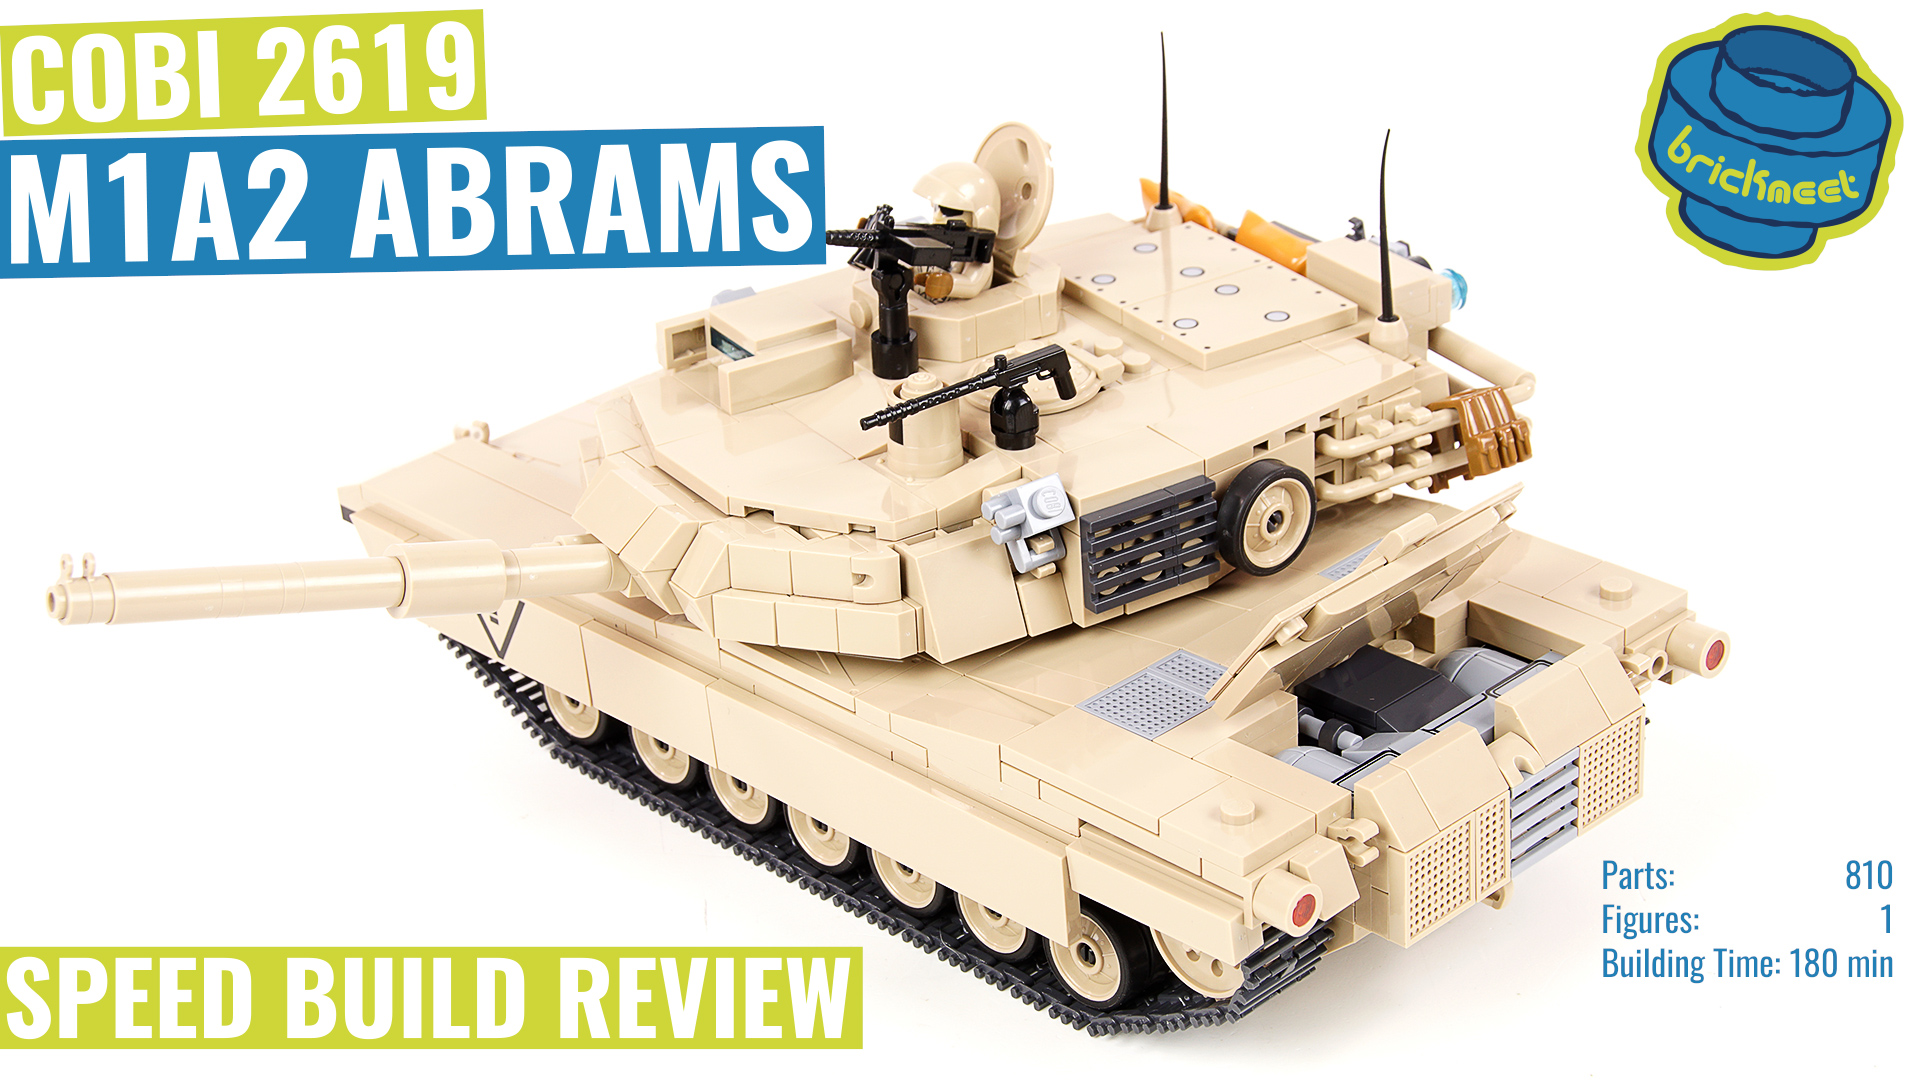 COBI 2619 M1A2 Abrams amerikanischer Militär Panzer Bausteinsatz 810 Teile 1:35 